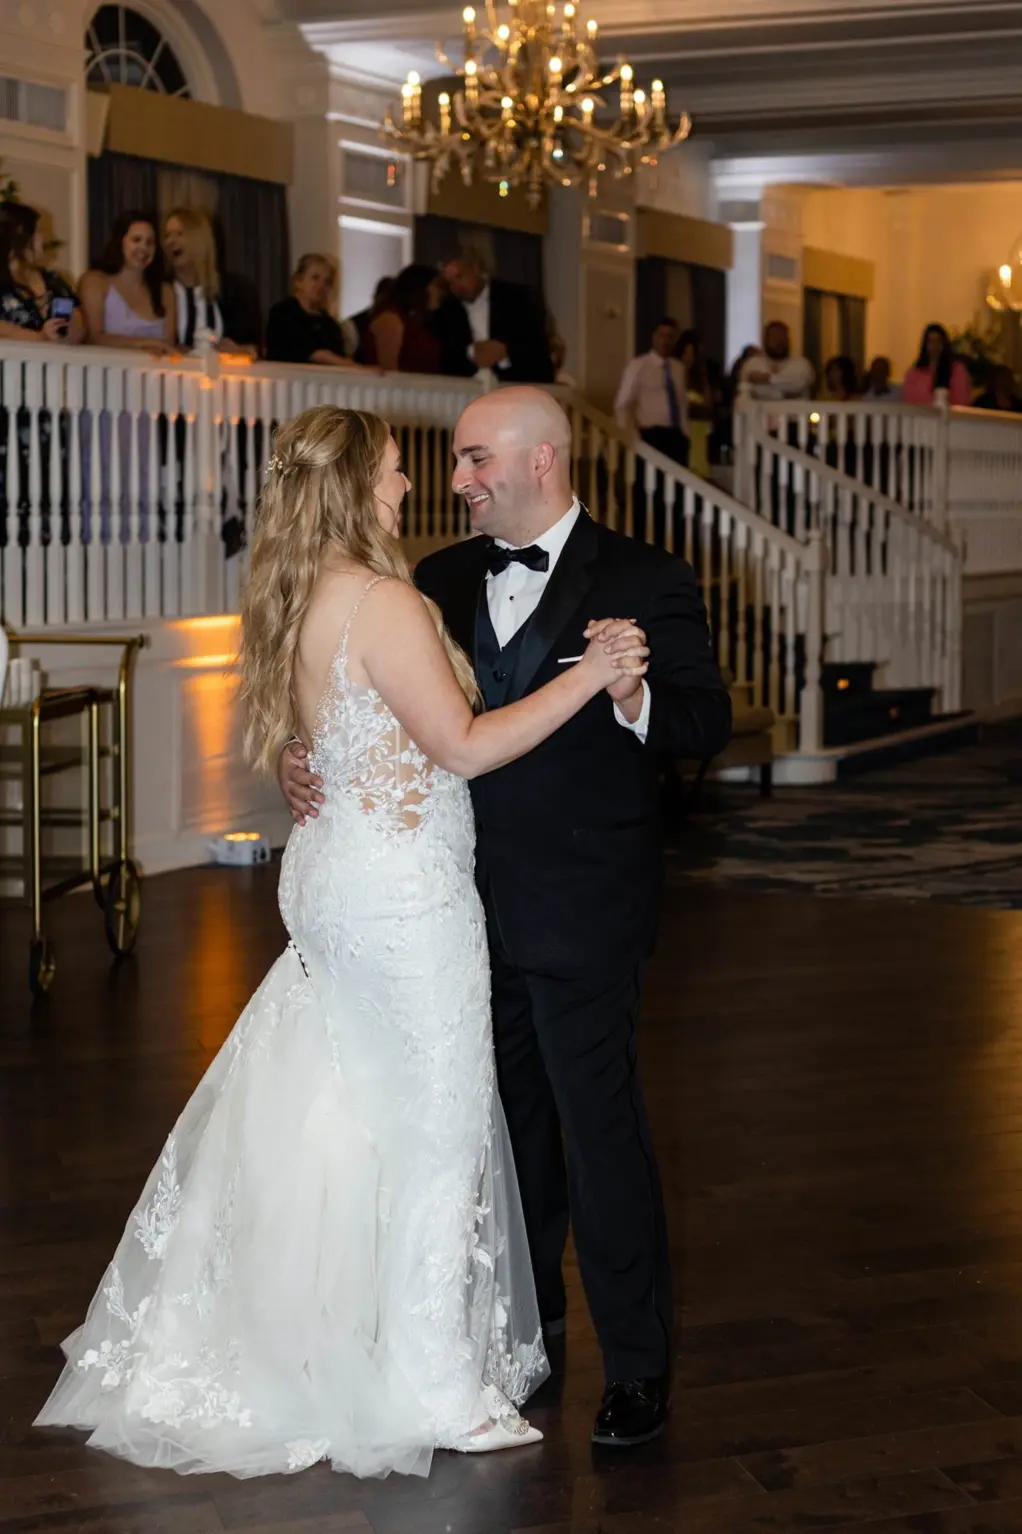 Bride and Groom First Dance | Tampa Bay Wedding DJ Grant Hemond and Associates